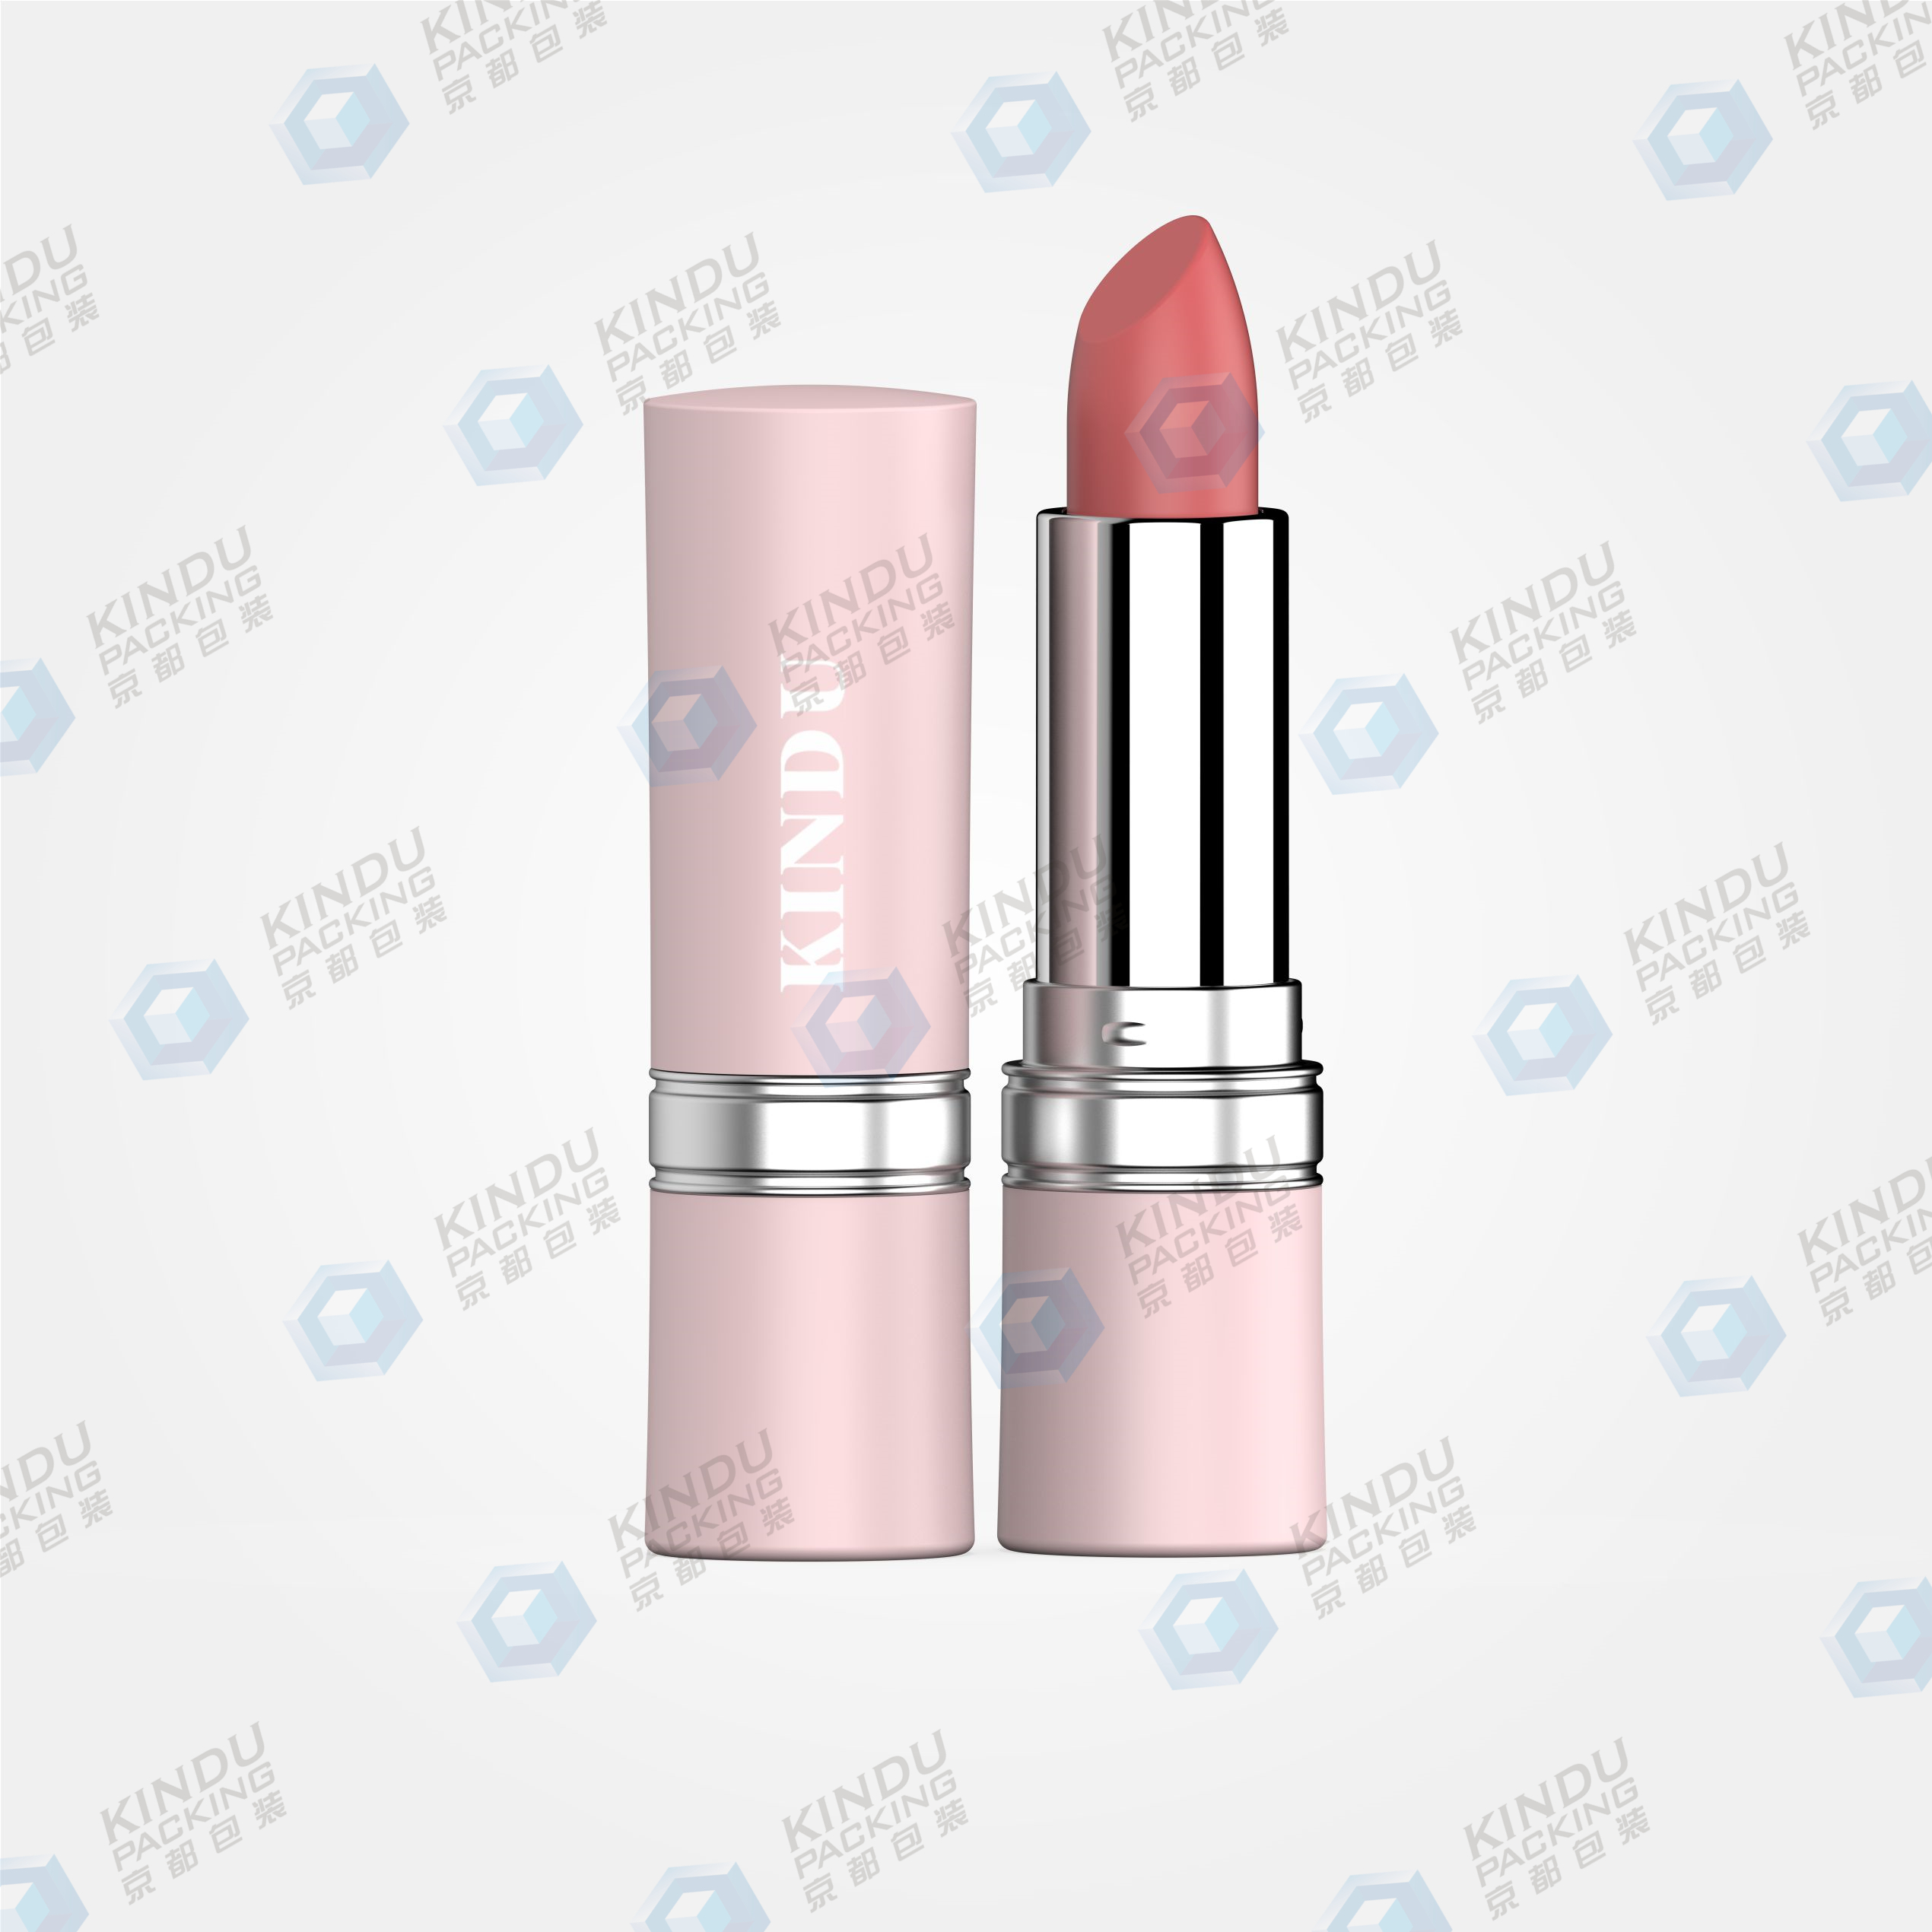 Round lipstick packaging (ZH-K0019)